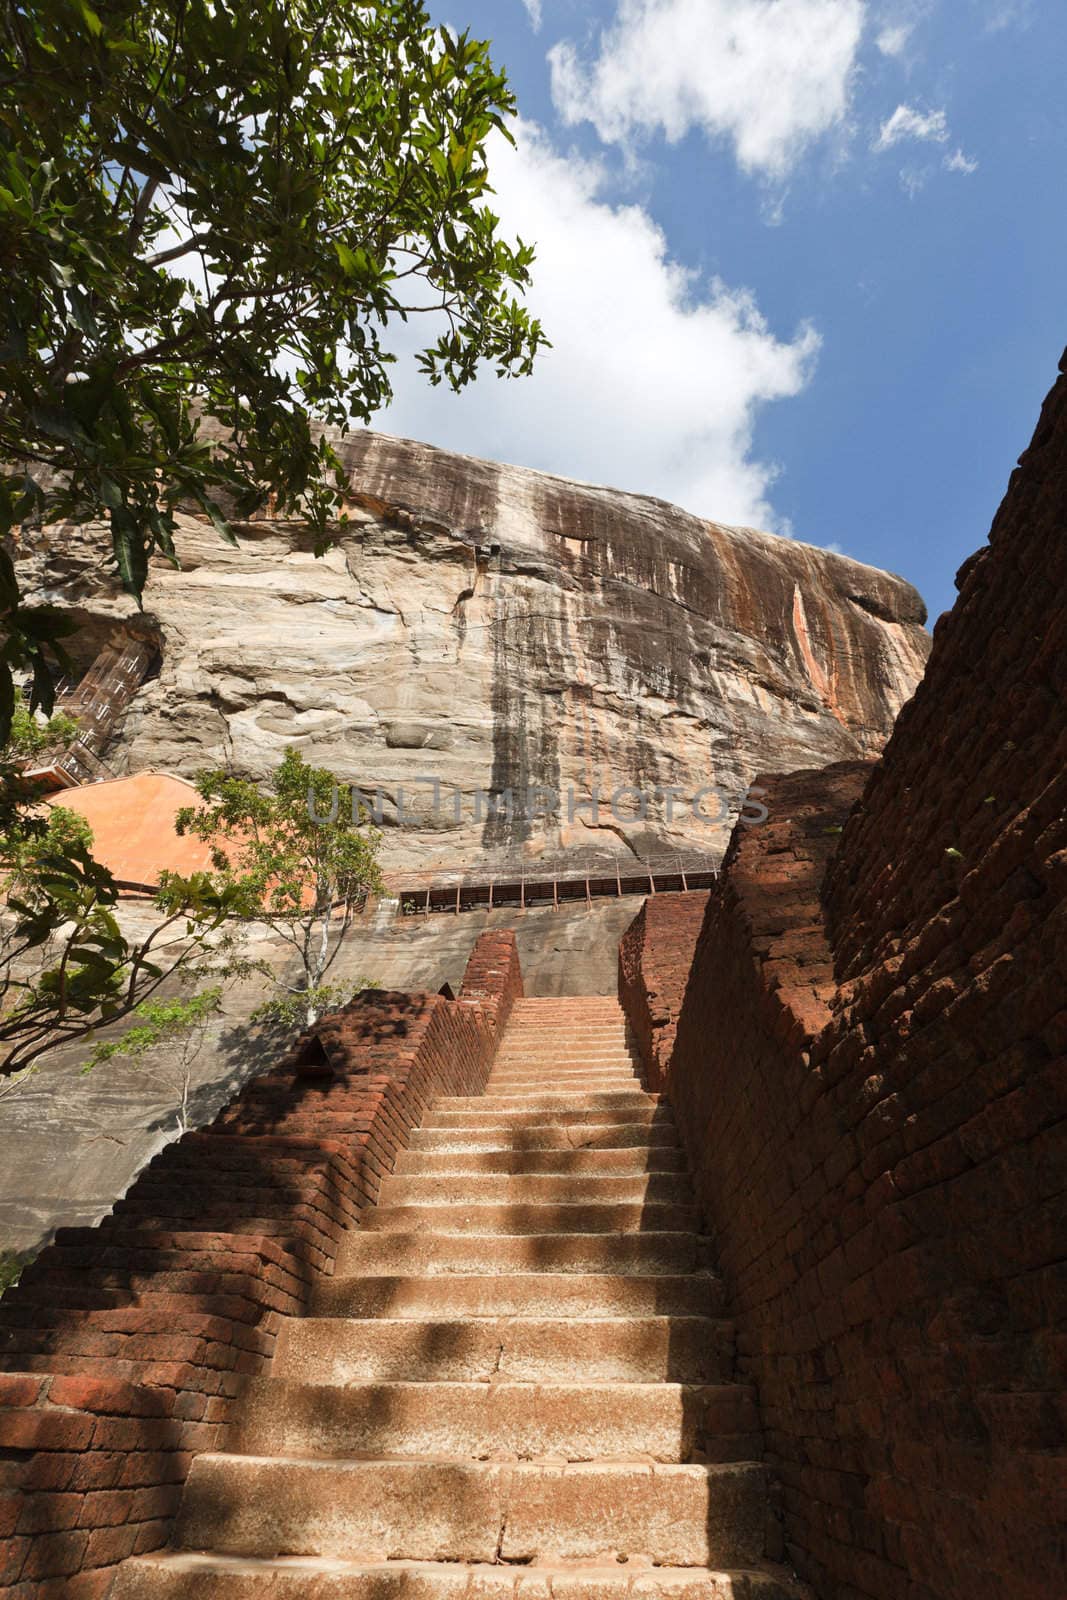 Stairs at Sigiriya by dimol